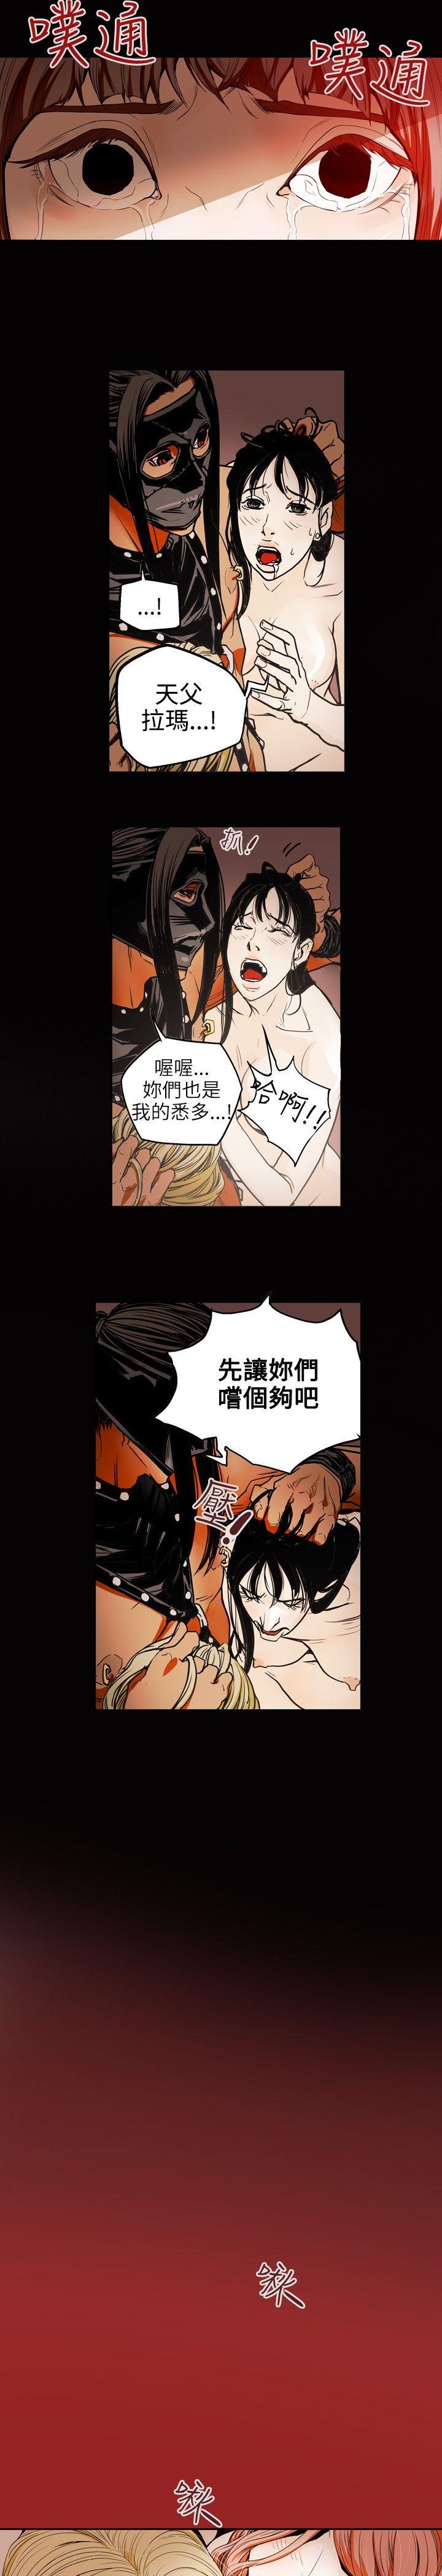 Honey trap 甜蜜陷阱  第29话 漫画图片12.jpg